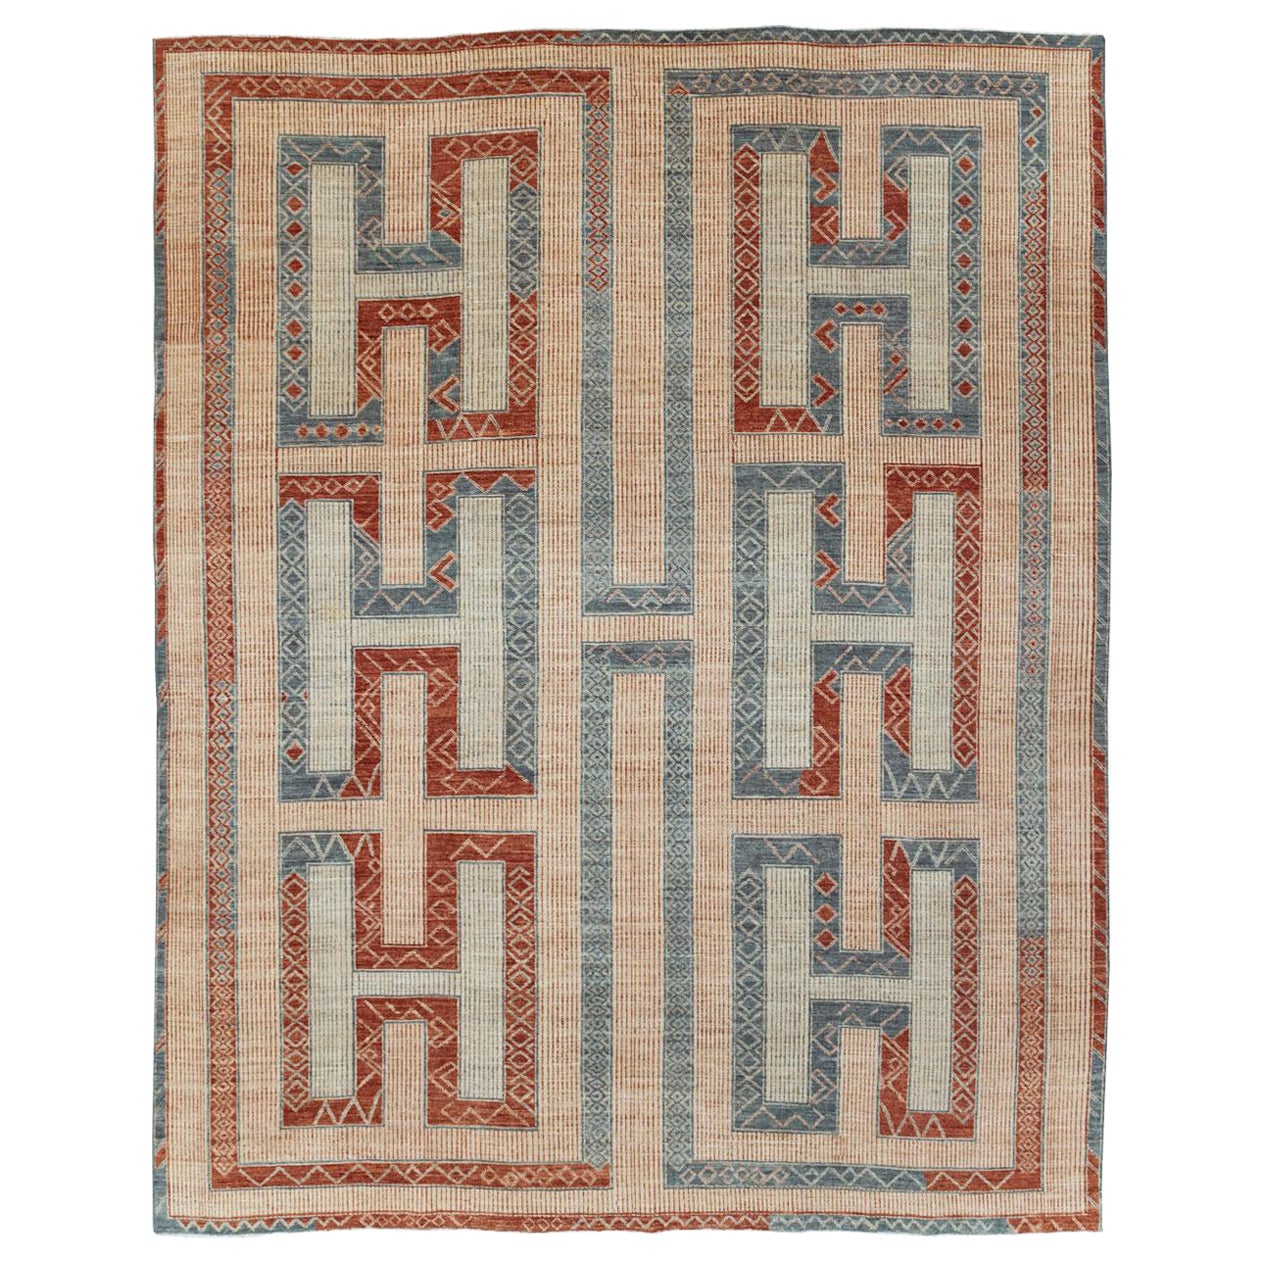 North African Tuareg Inspired Turkish Room Size Carpet